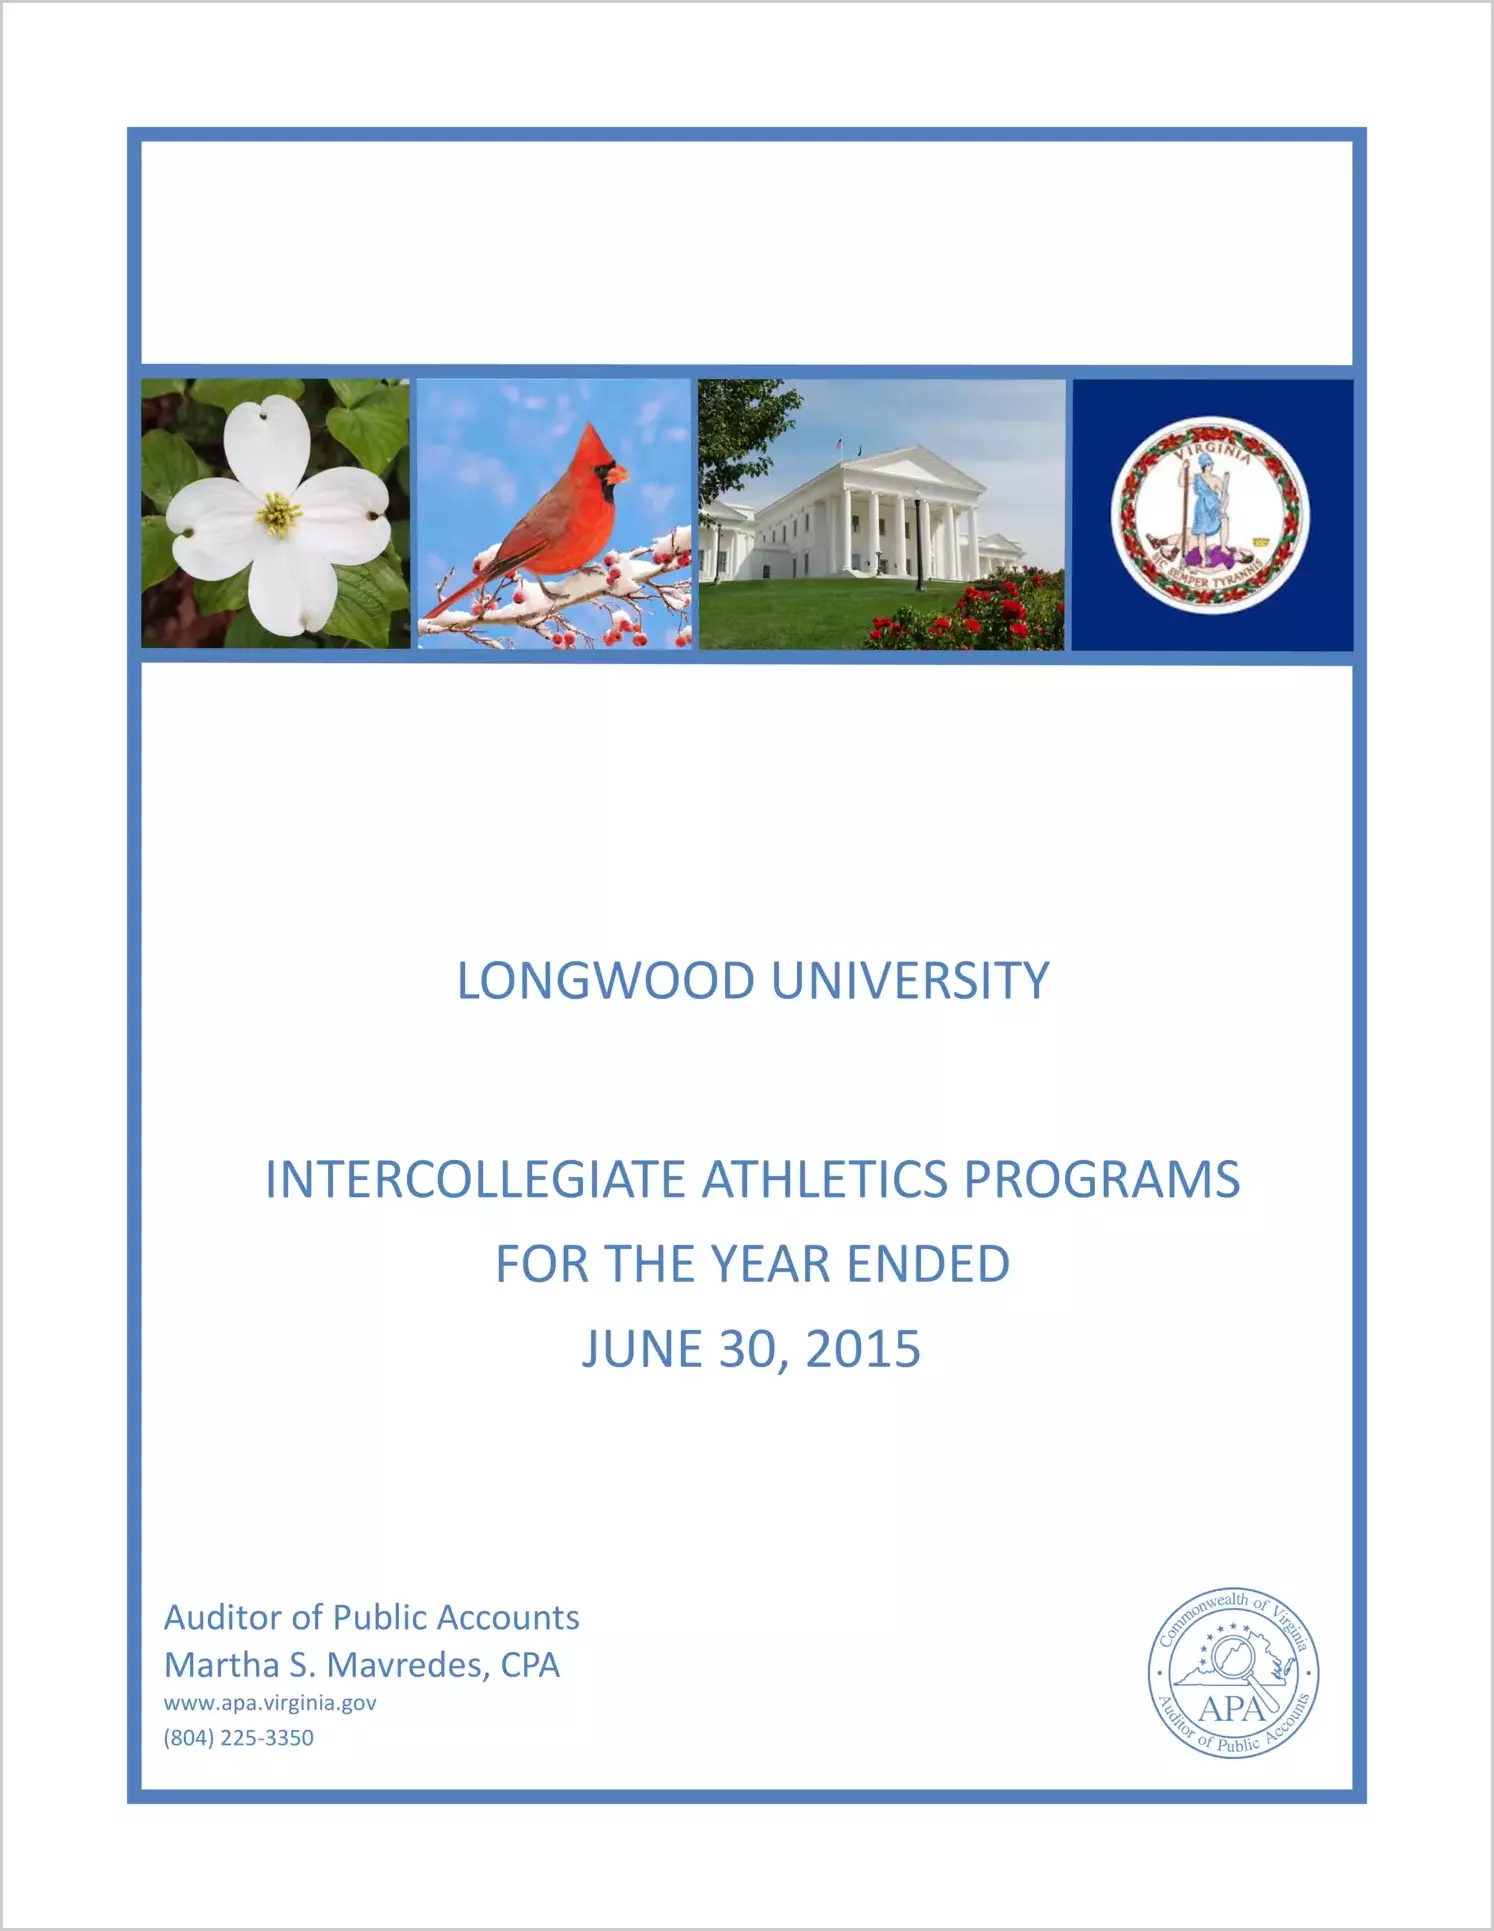 Longwood University Intercollegiate Athletics Programs report for the year ended June 30, 2015